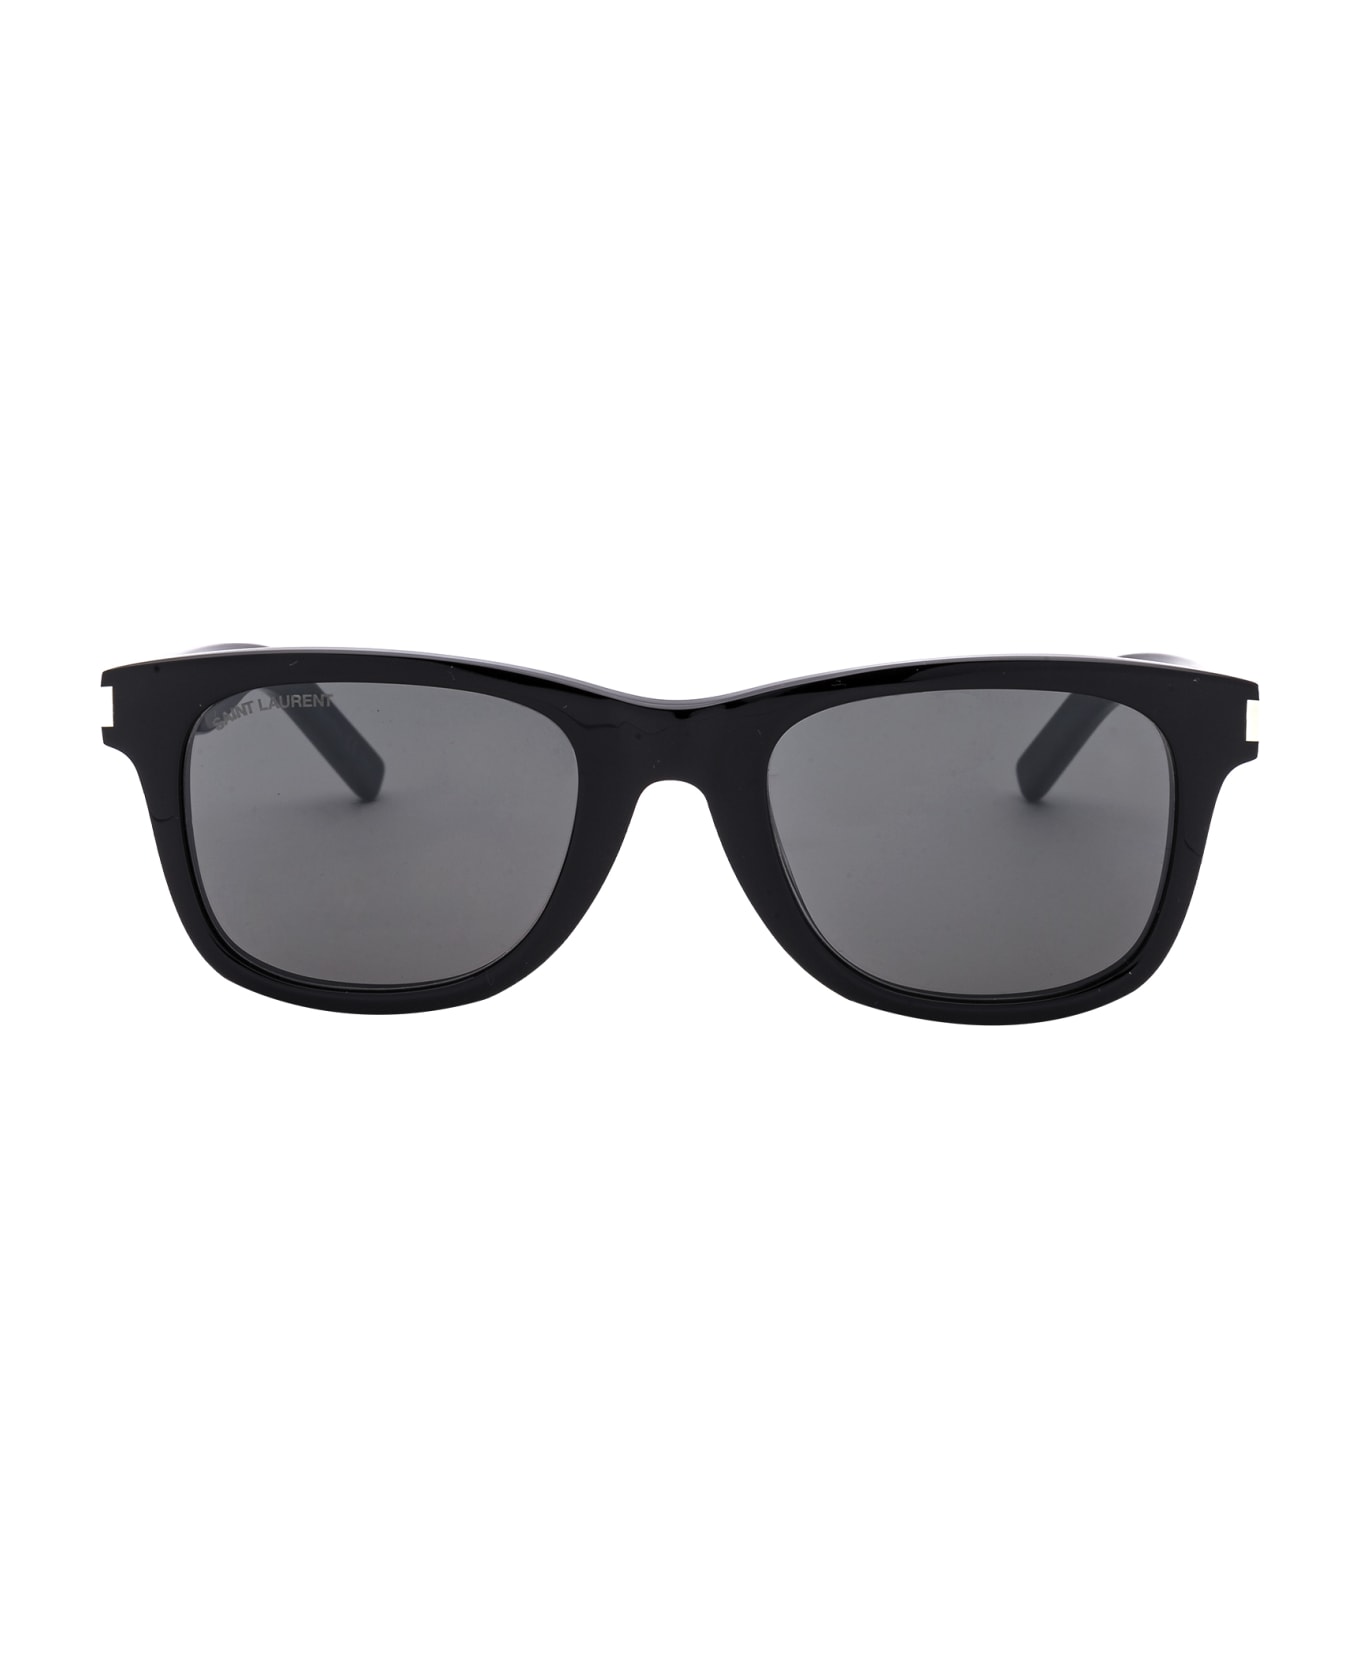 Saint Laurent Eyewear Sl 51 Sunglasses - 002 Ray-ban Rb4259 Black Sunglasses